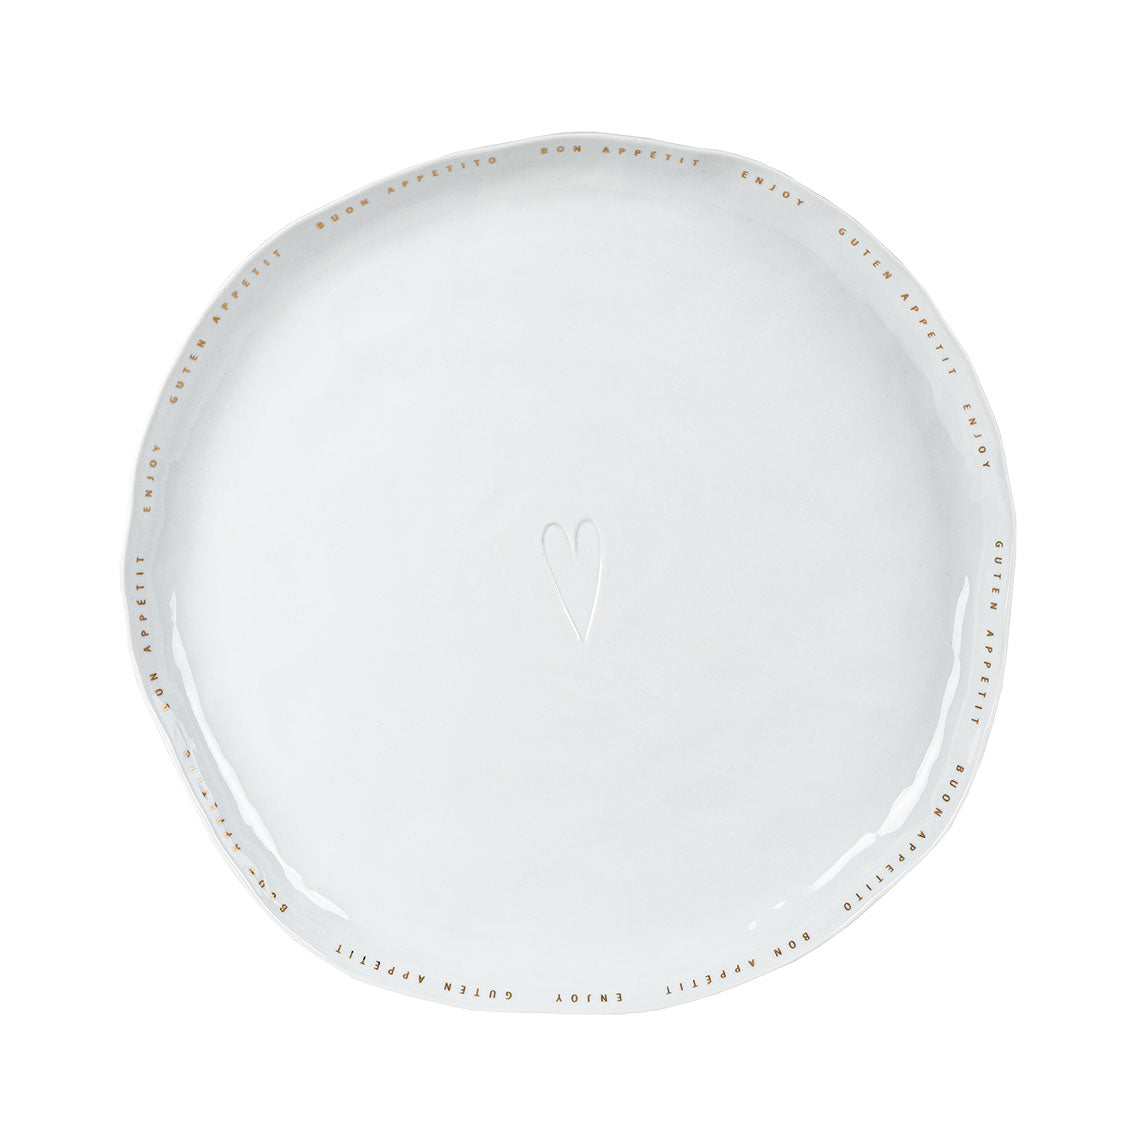 Rader Design Platte Bom apetite (33cm)